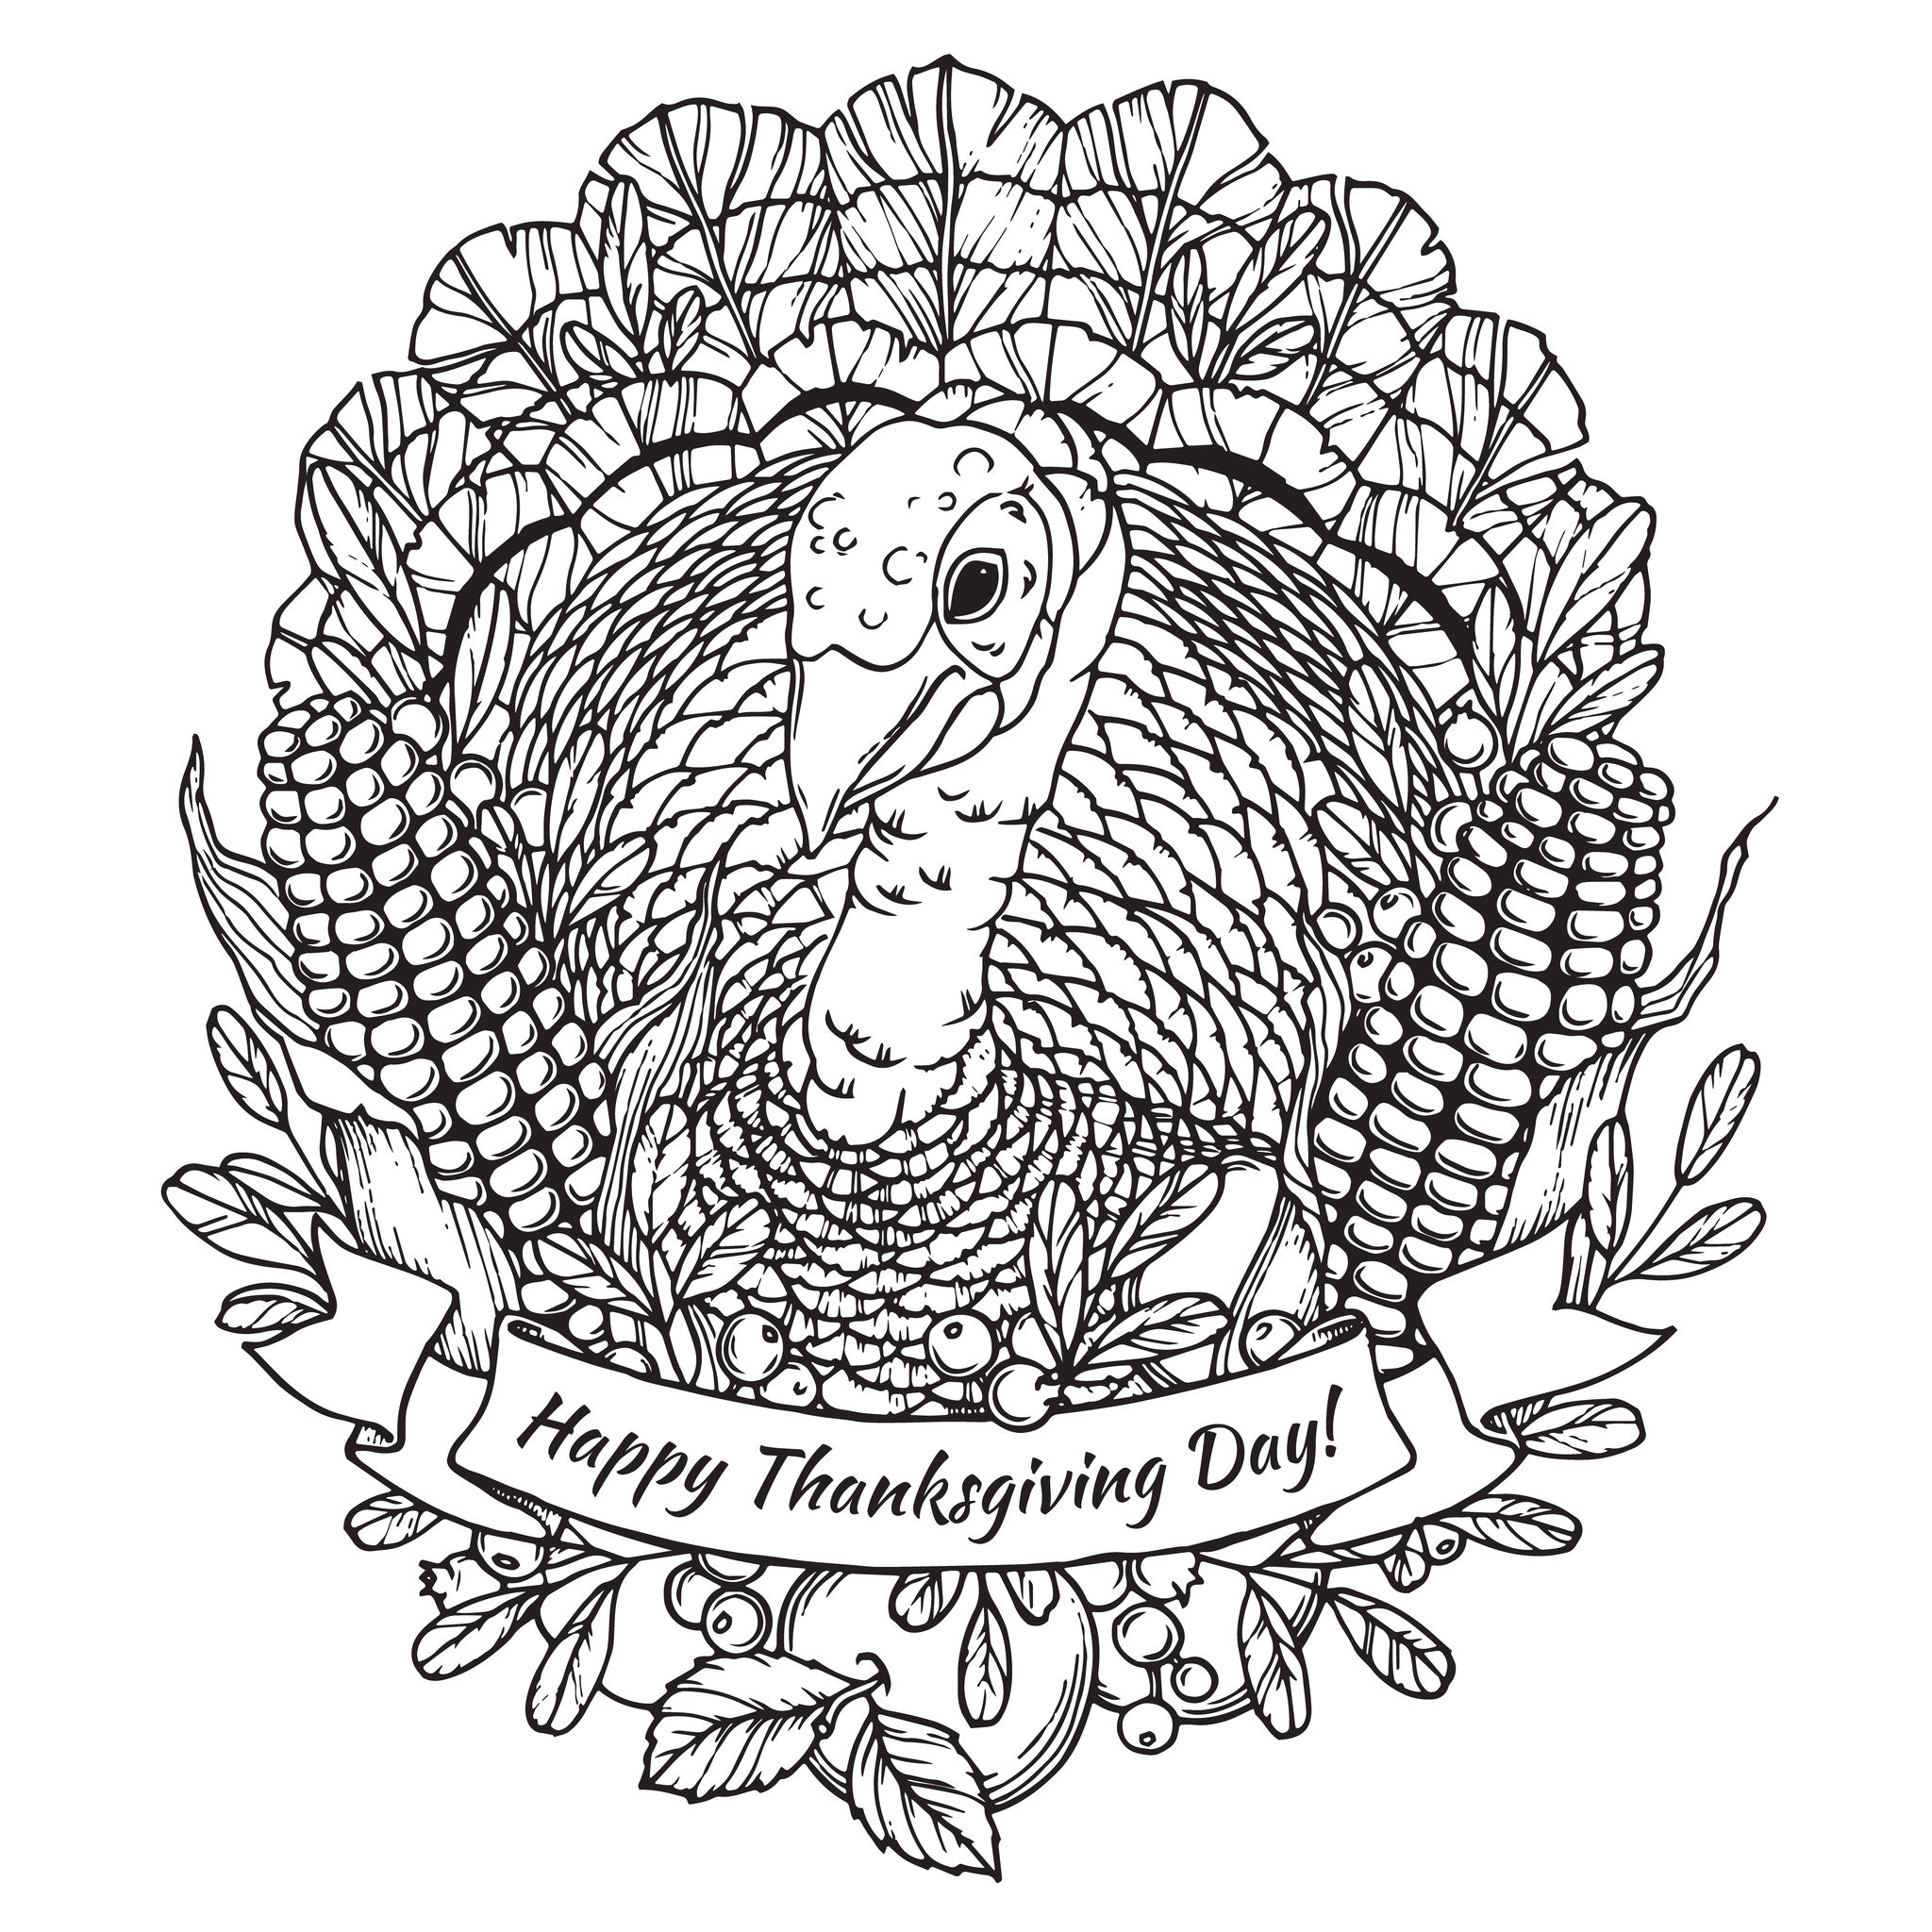 Disegni da colorare per adulti : Thanksgiving - 1, Artista : Frauleinfreya   Fonte : 123rf